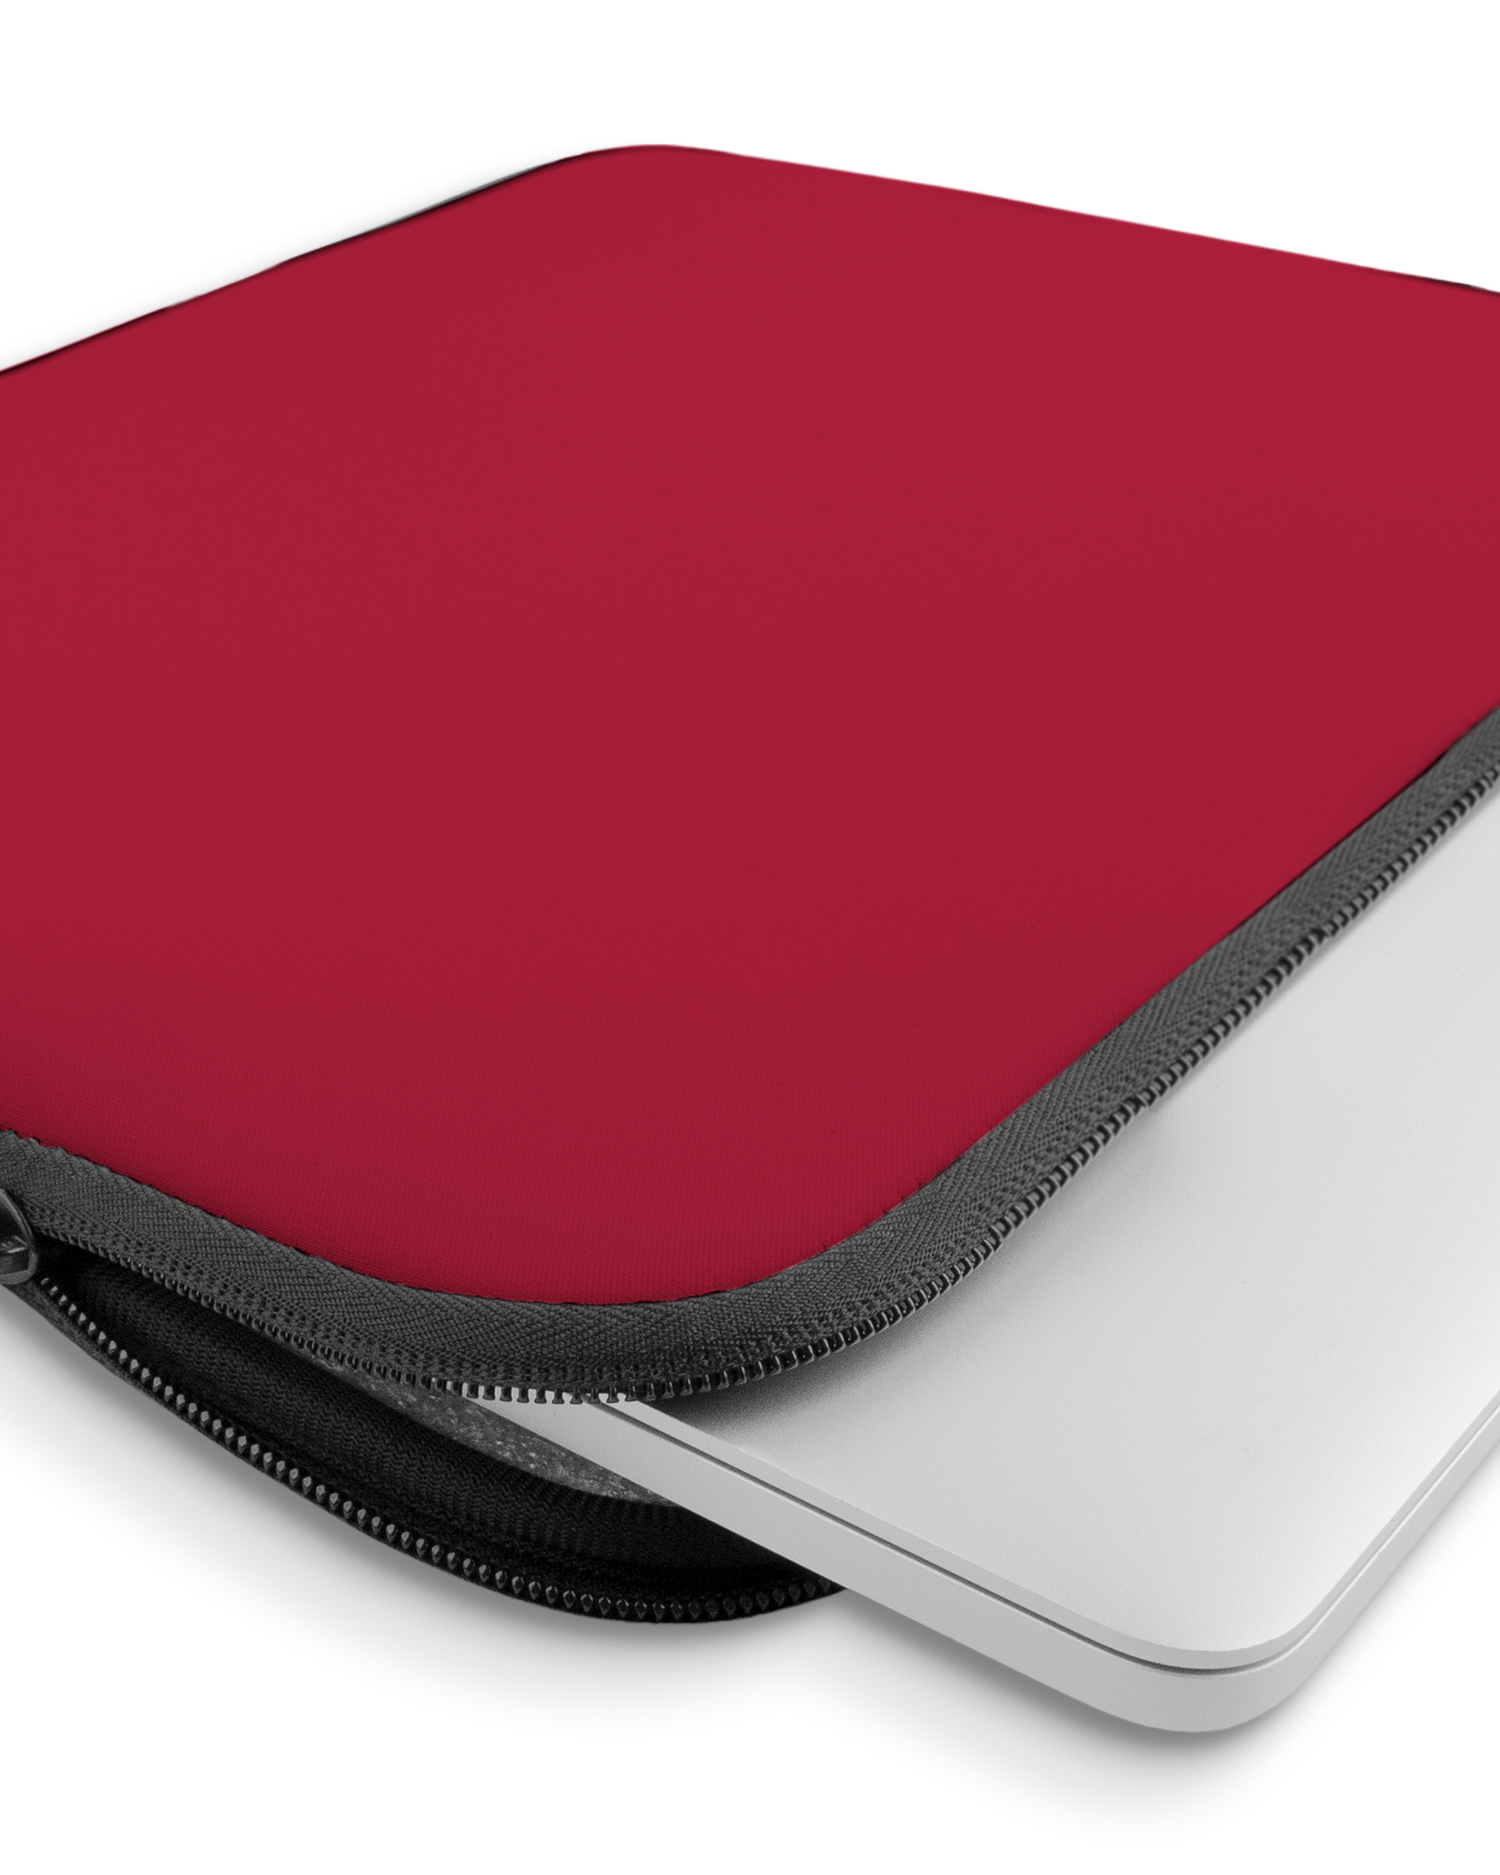 RED Laptophülle 15 Zoll mit Gerät im Inneren